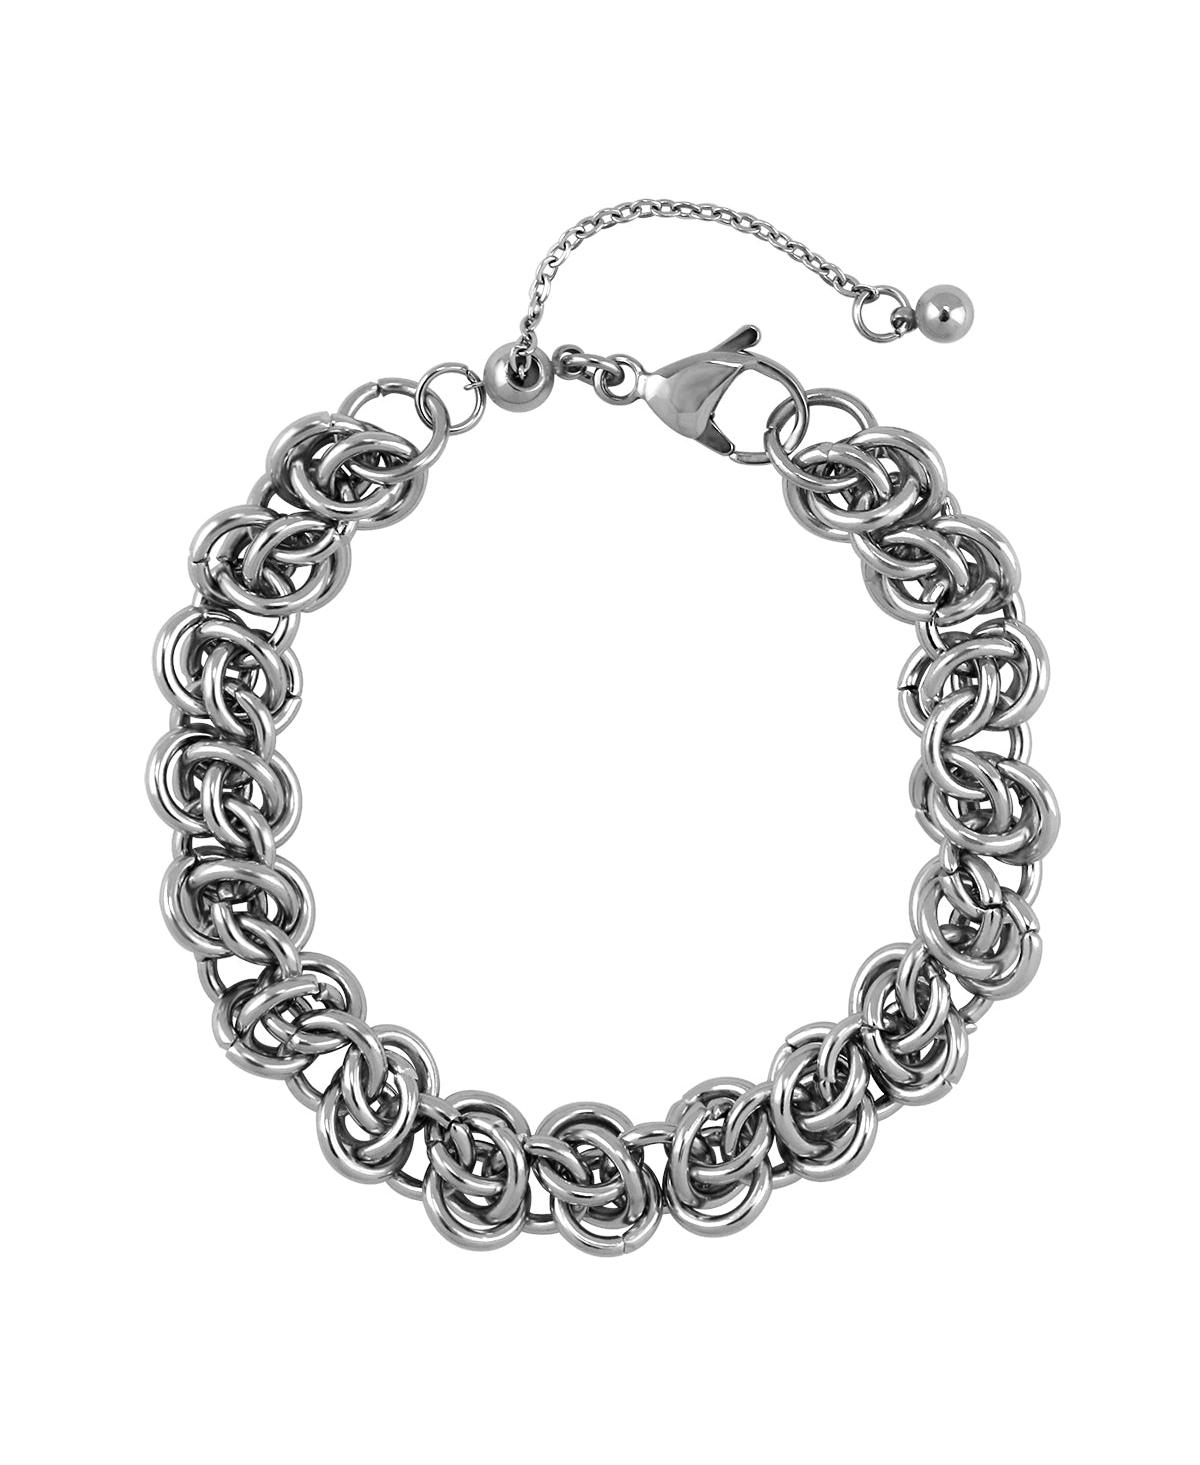 Tyler Knot Chain Bracelet - Silver